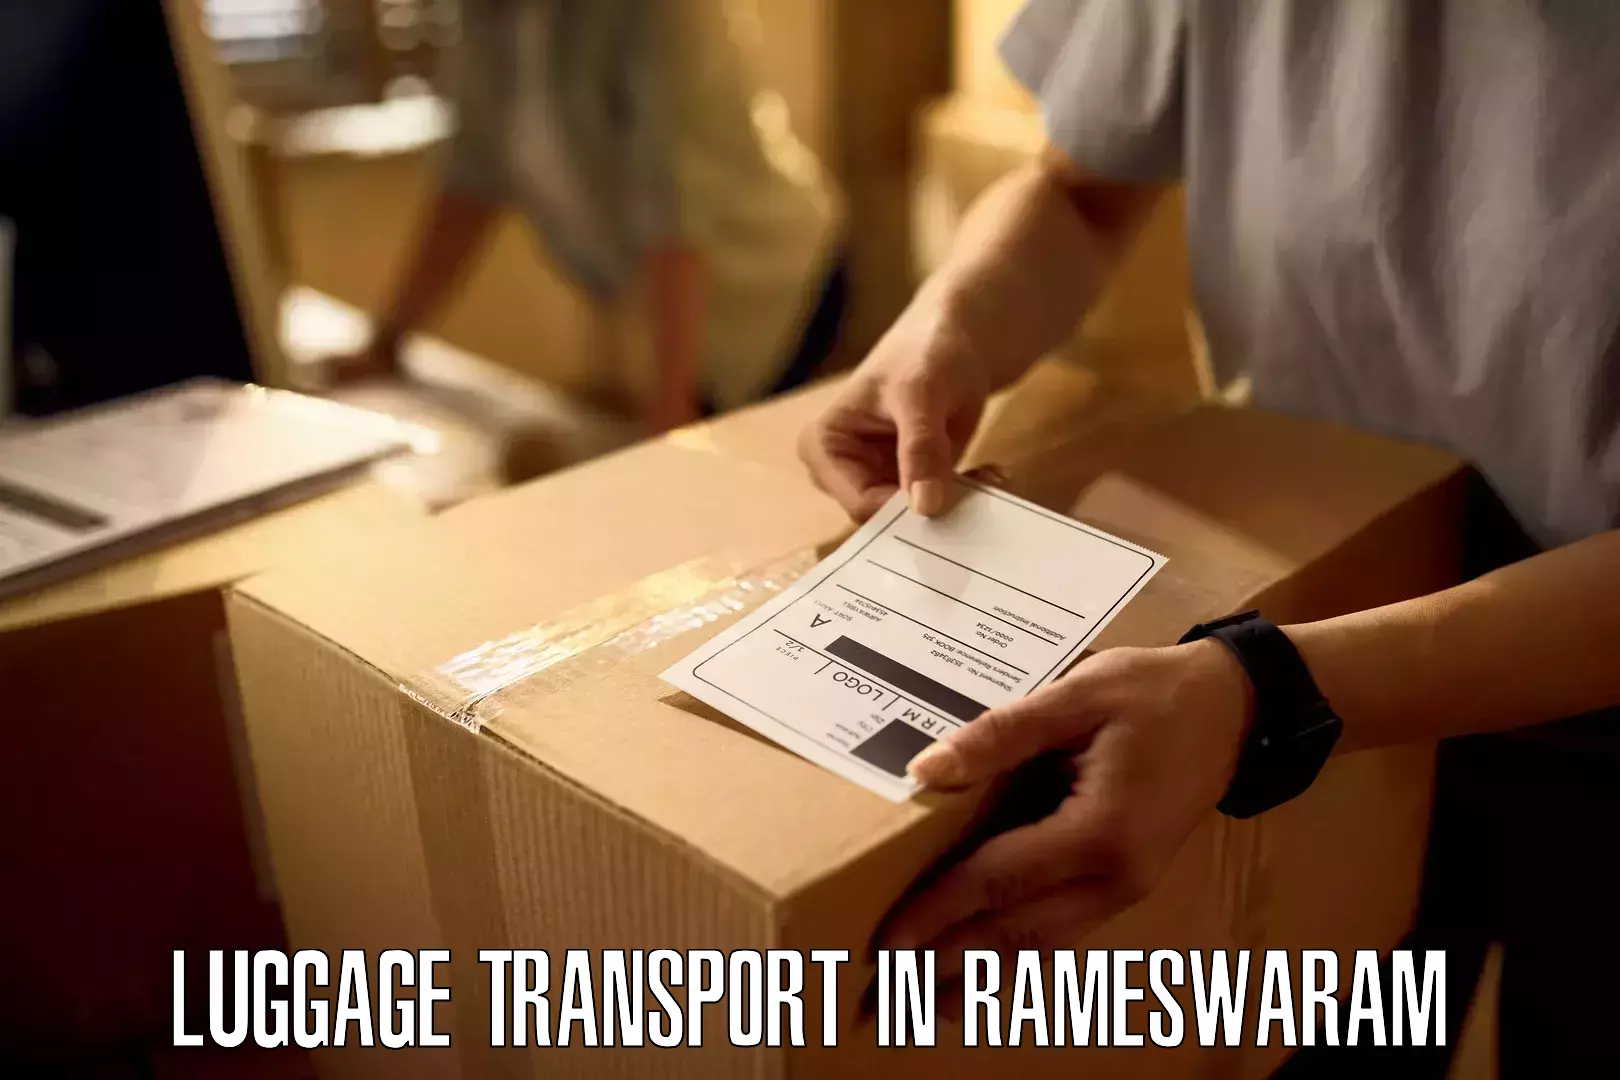 Luggage transport service in Rameswaram